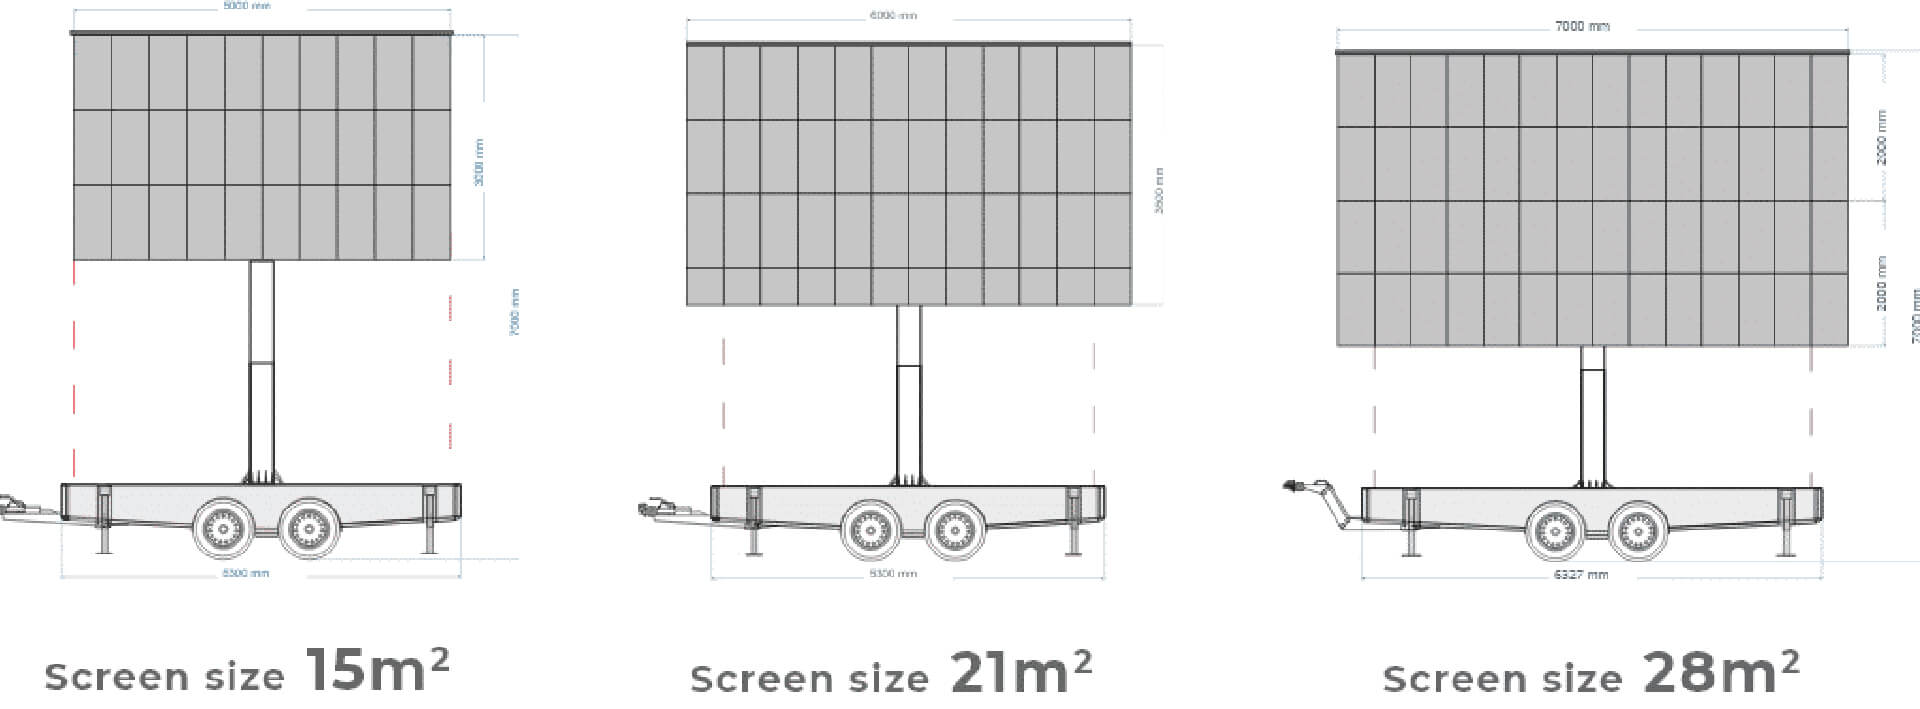 Screen sizes